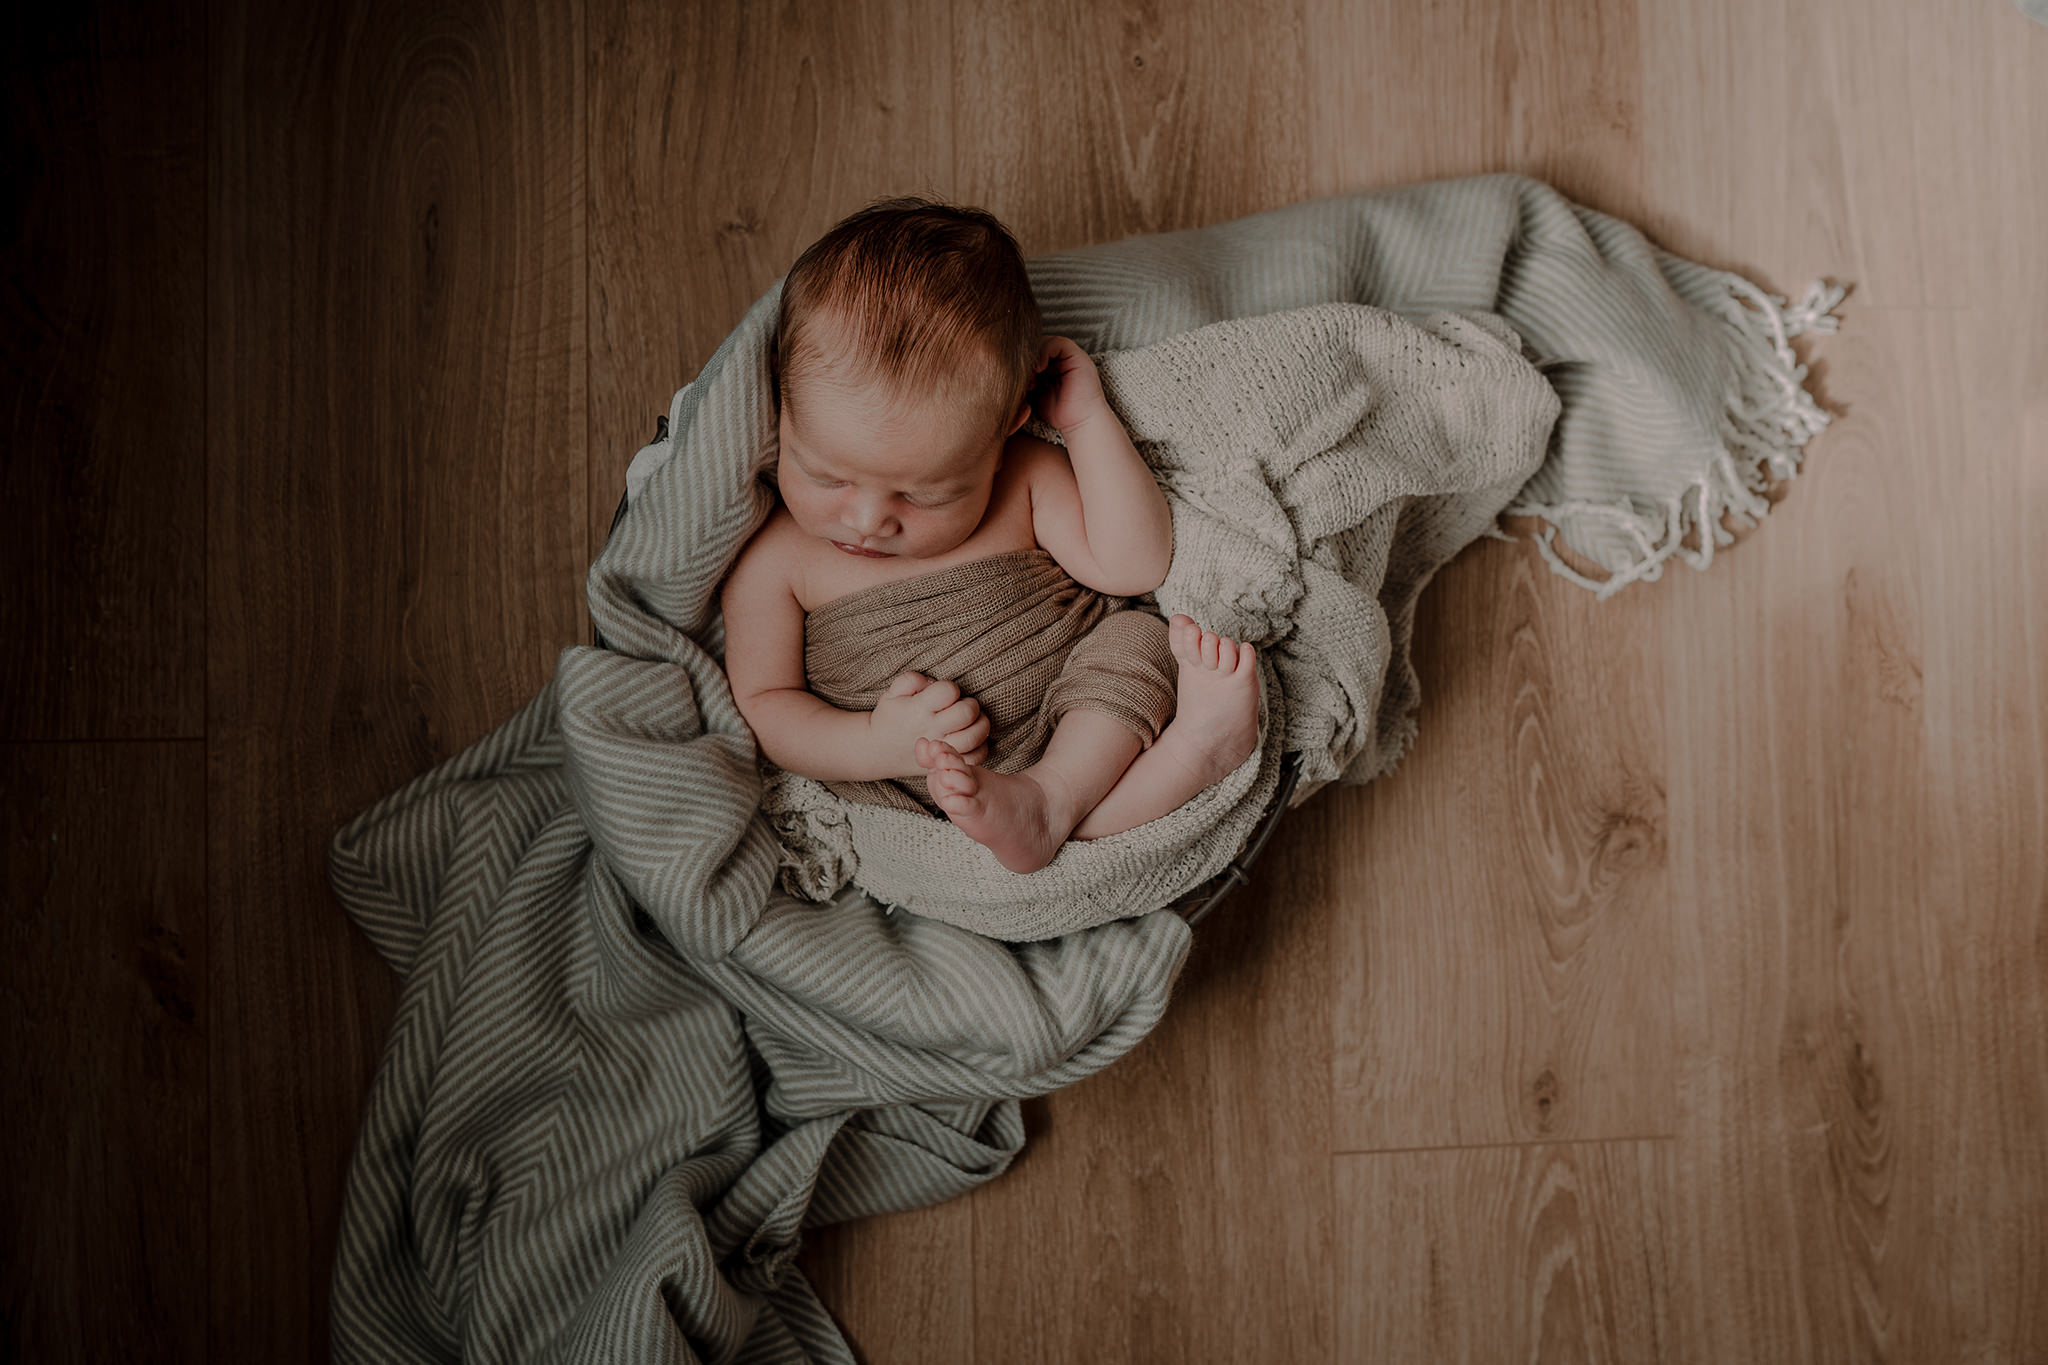 neutral tones blankets baby boy in home newborn photographer Belfast